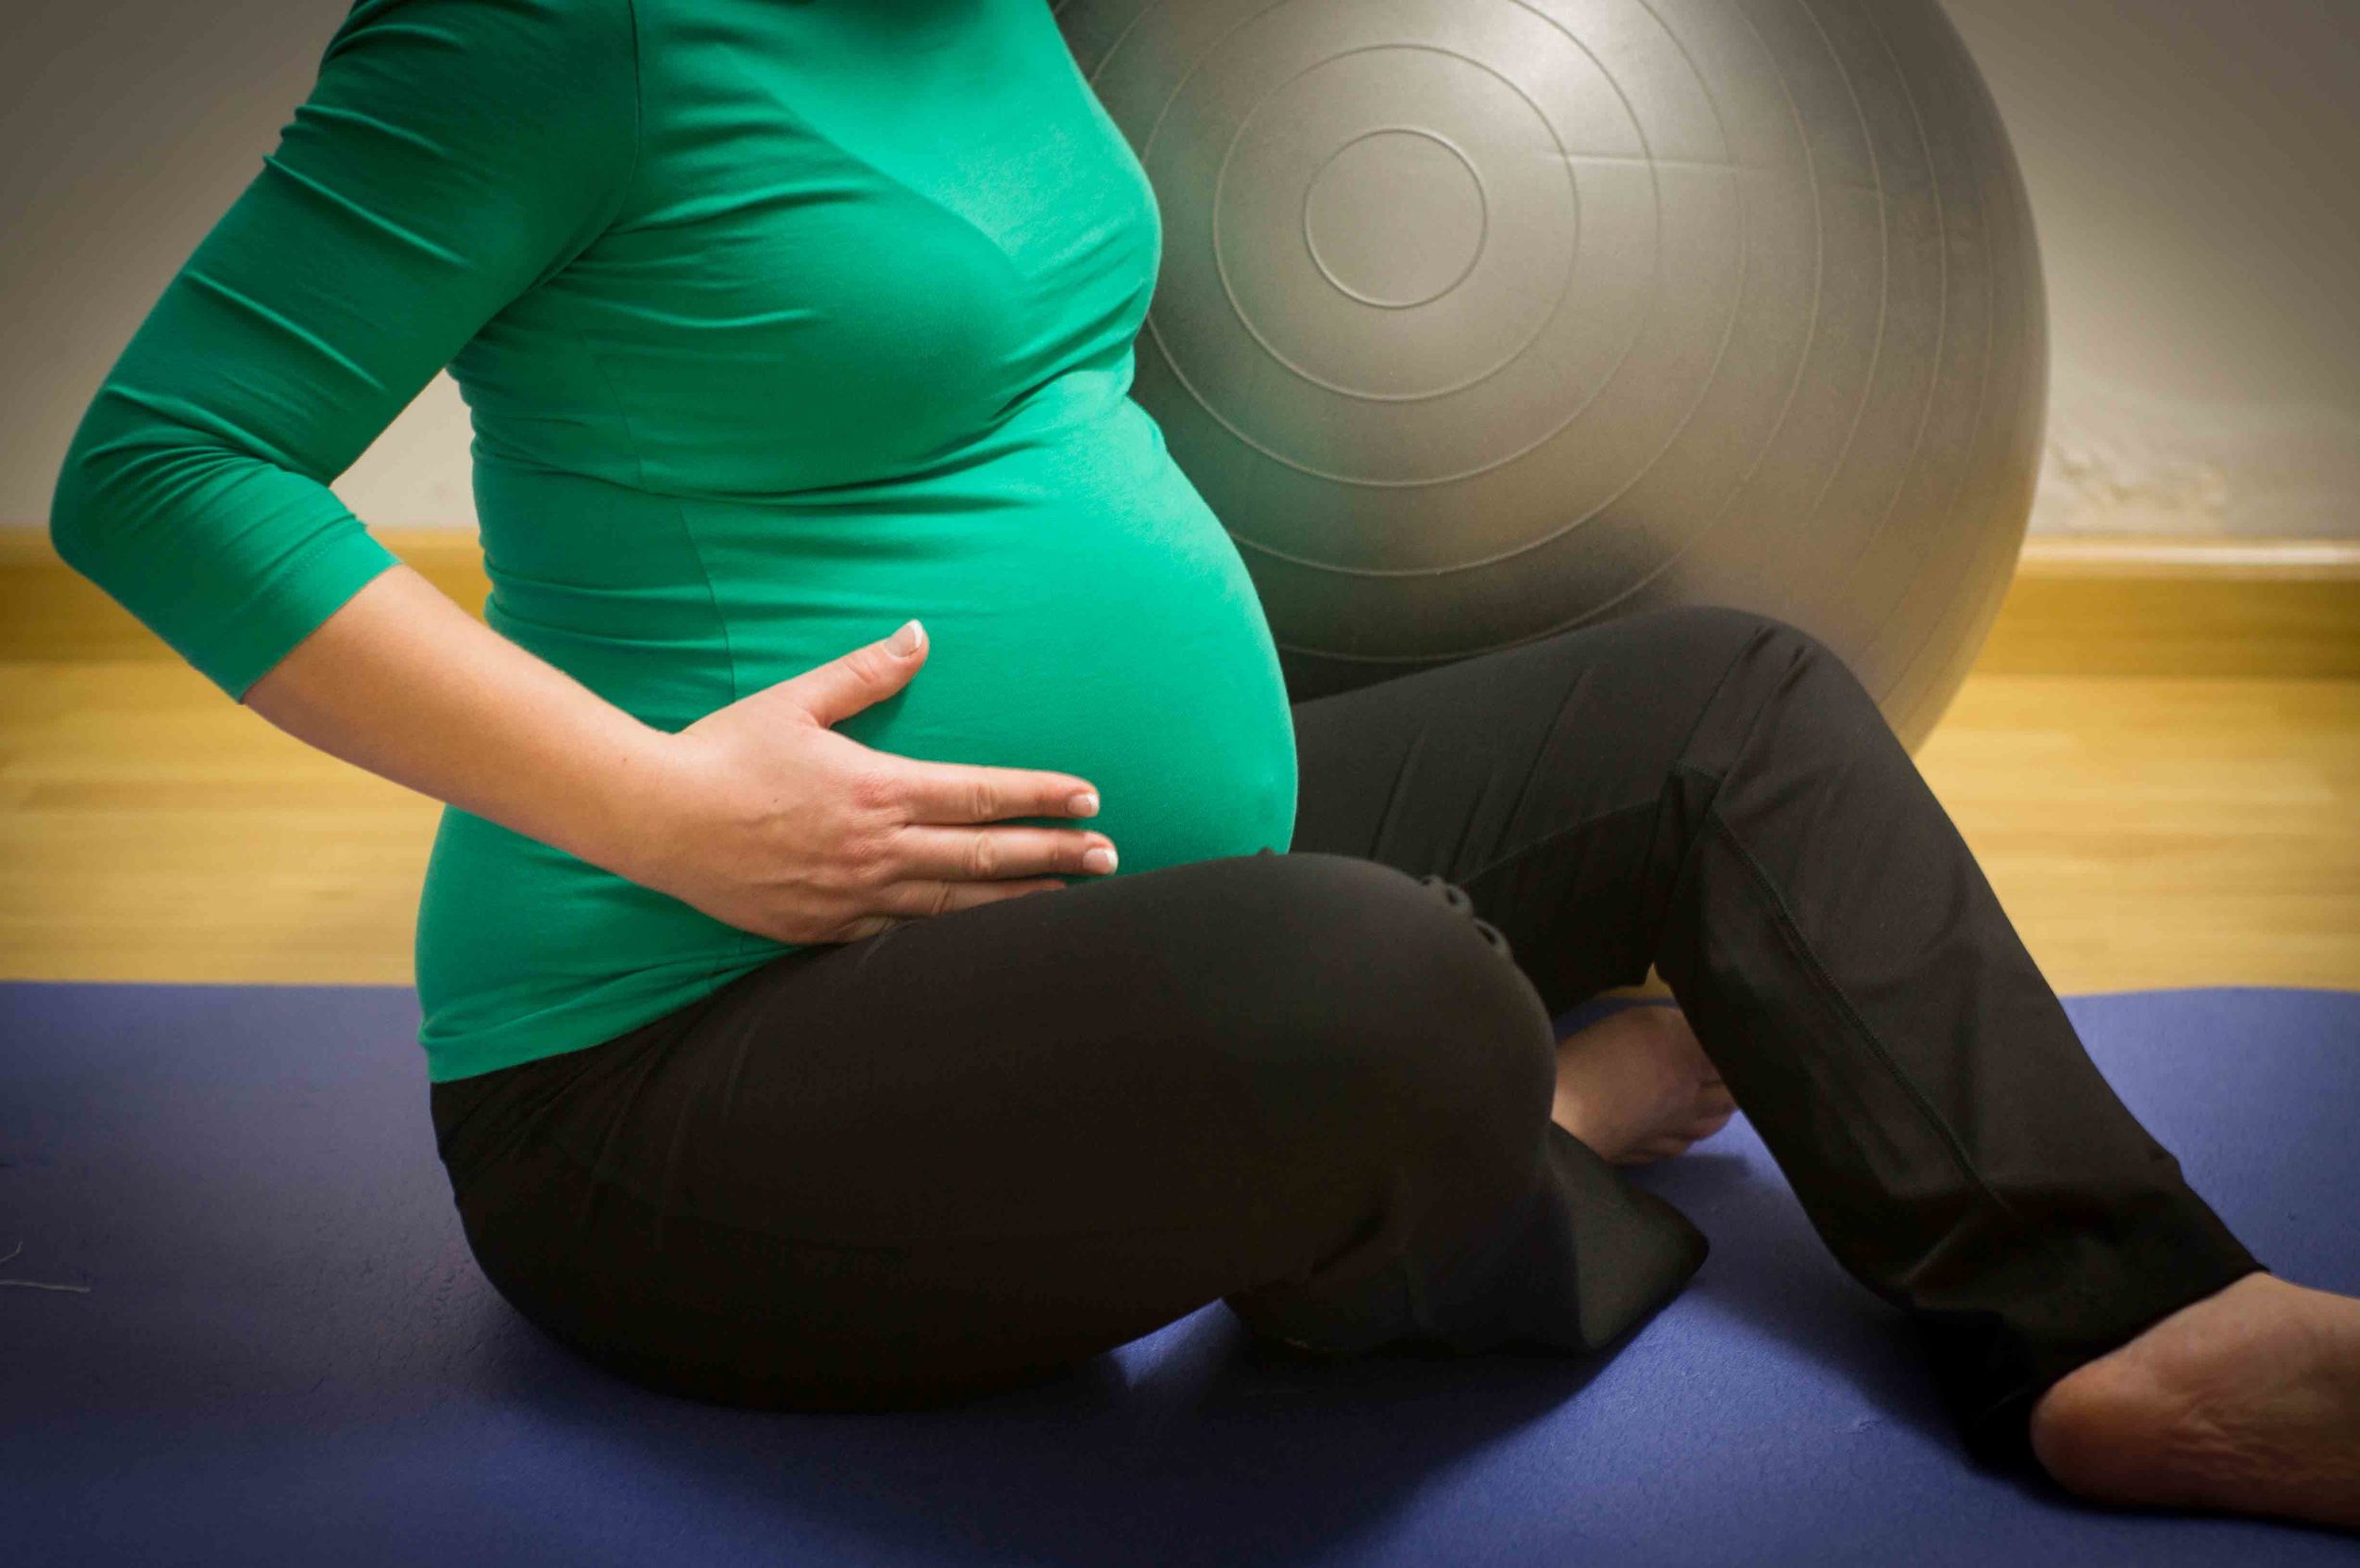 7 Amazing Yoga Poses for Pregnancy